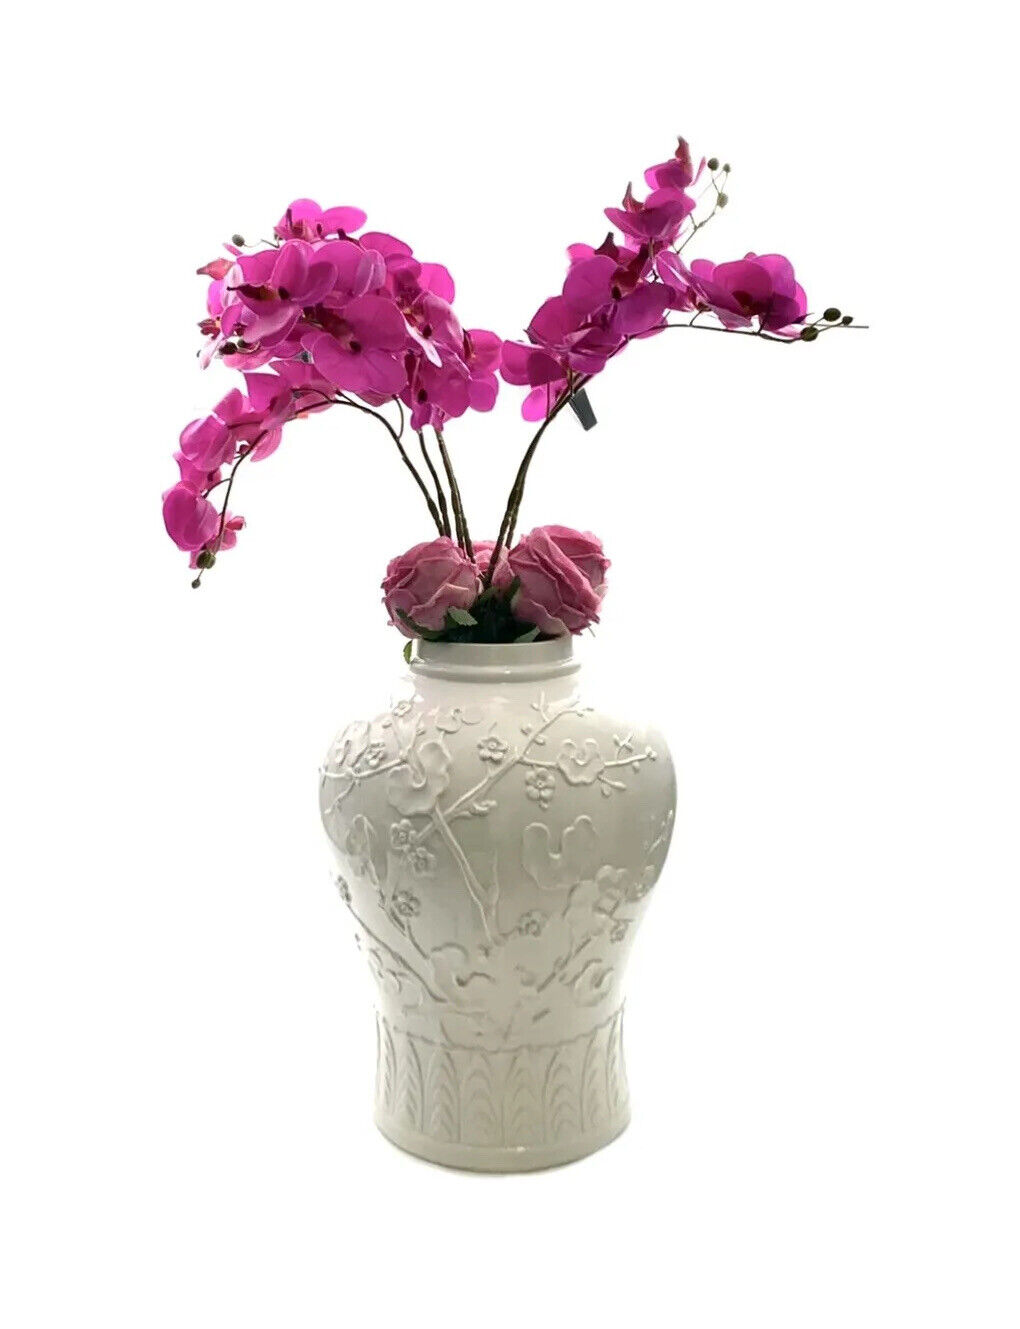 Vase Large White Ceramic Cherry Blossom Design Italian Vintage Decor